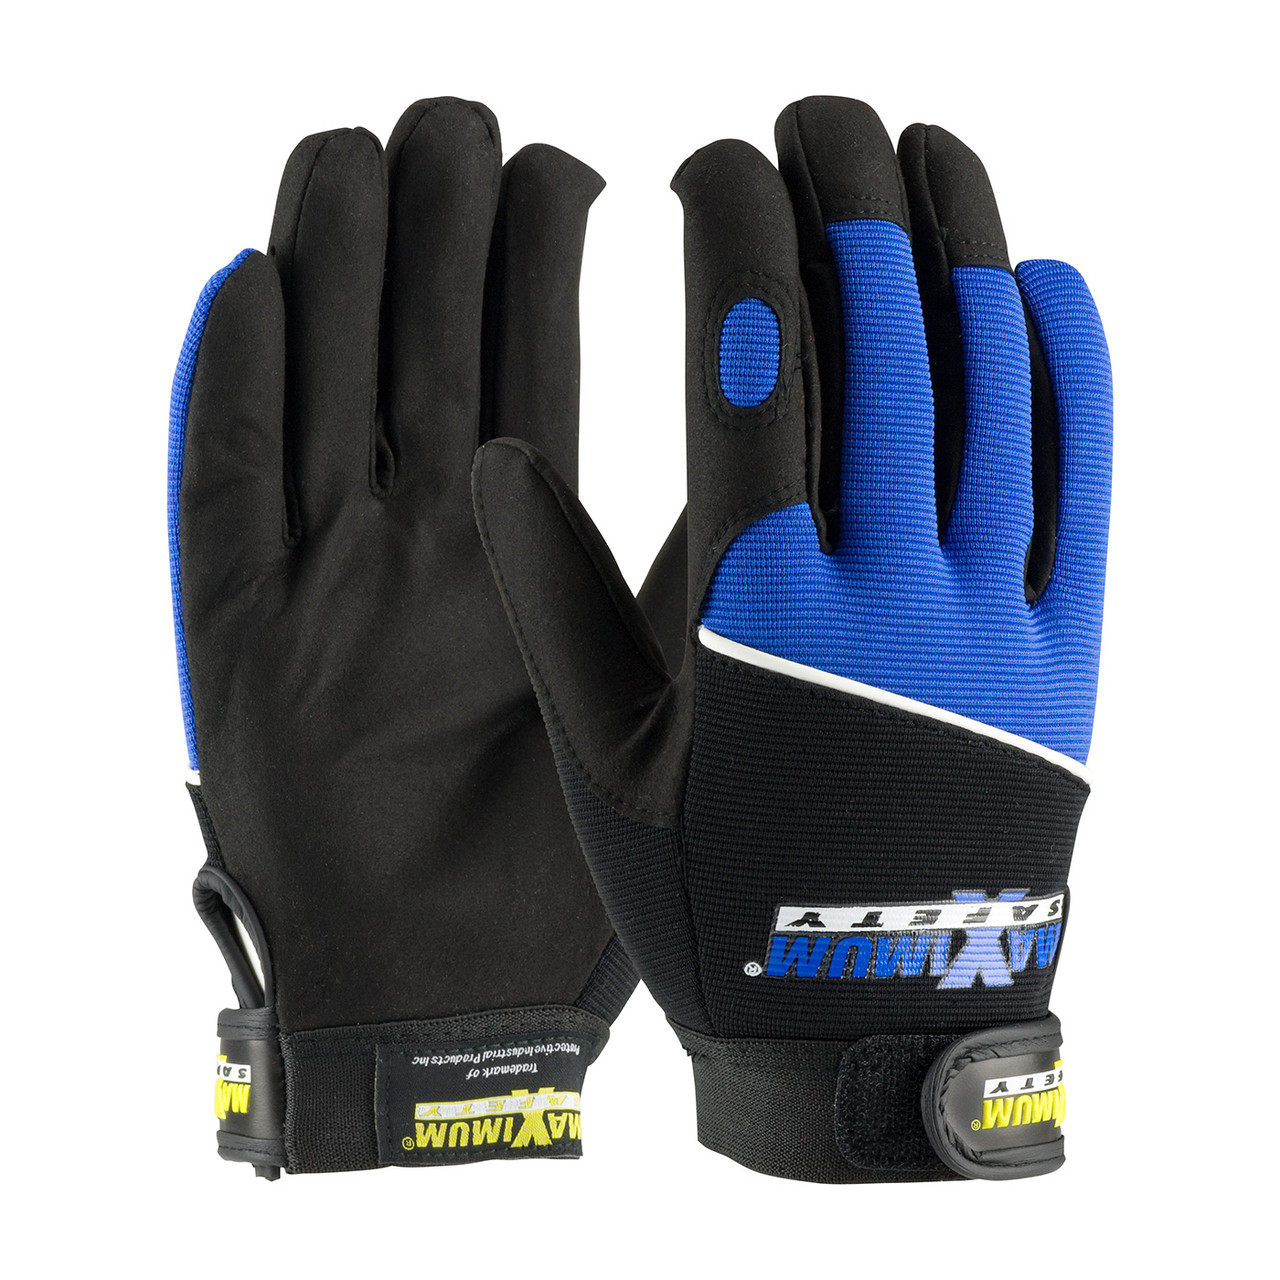 Mechanics Gloves Black/Blue PR L 